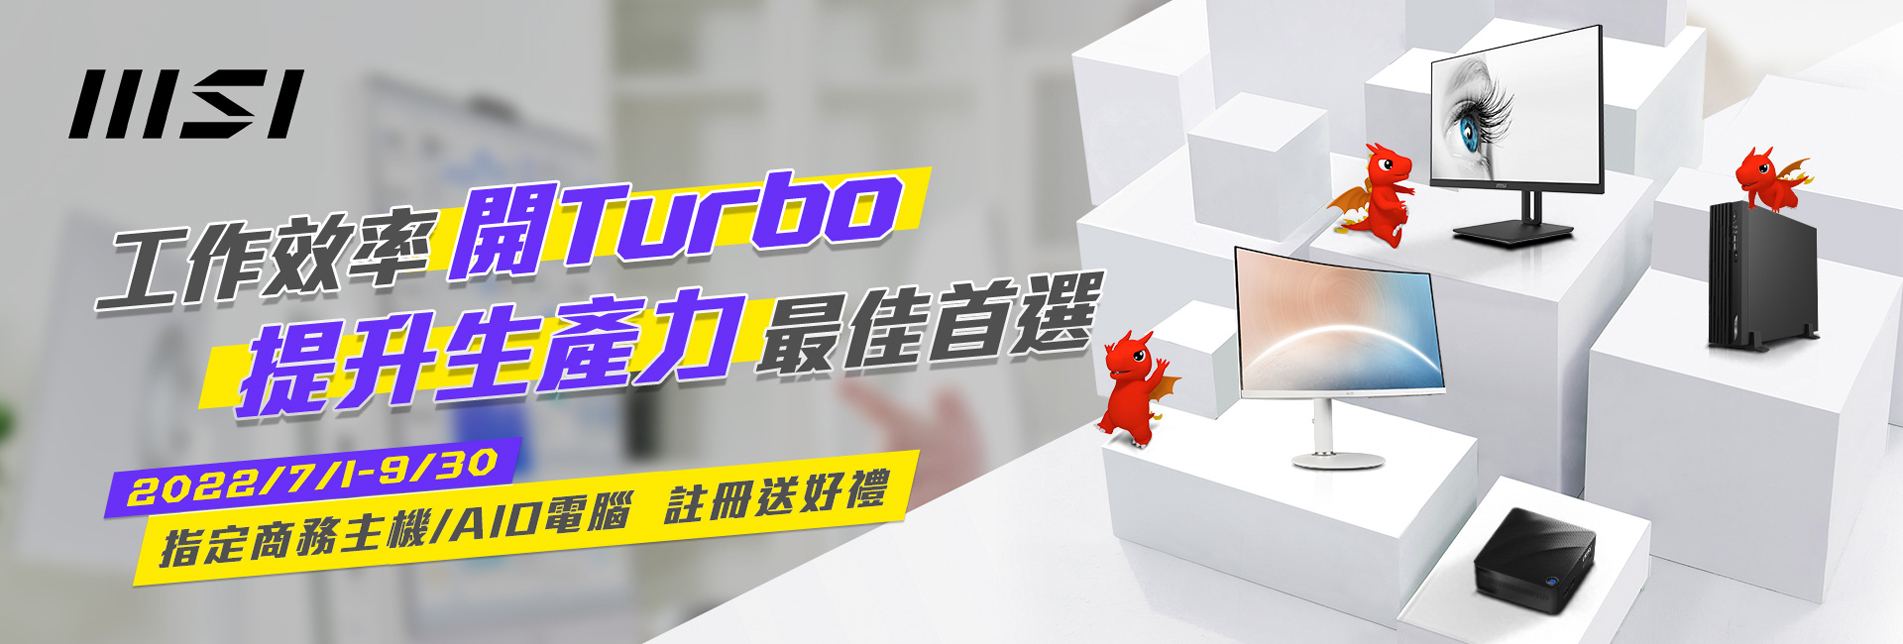 MSI CUBI、AIO  Banner【7/1-9/30 工作效率開Turbo 提升生產力最佳首選】